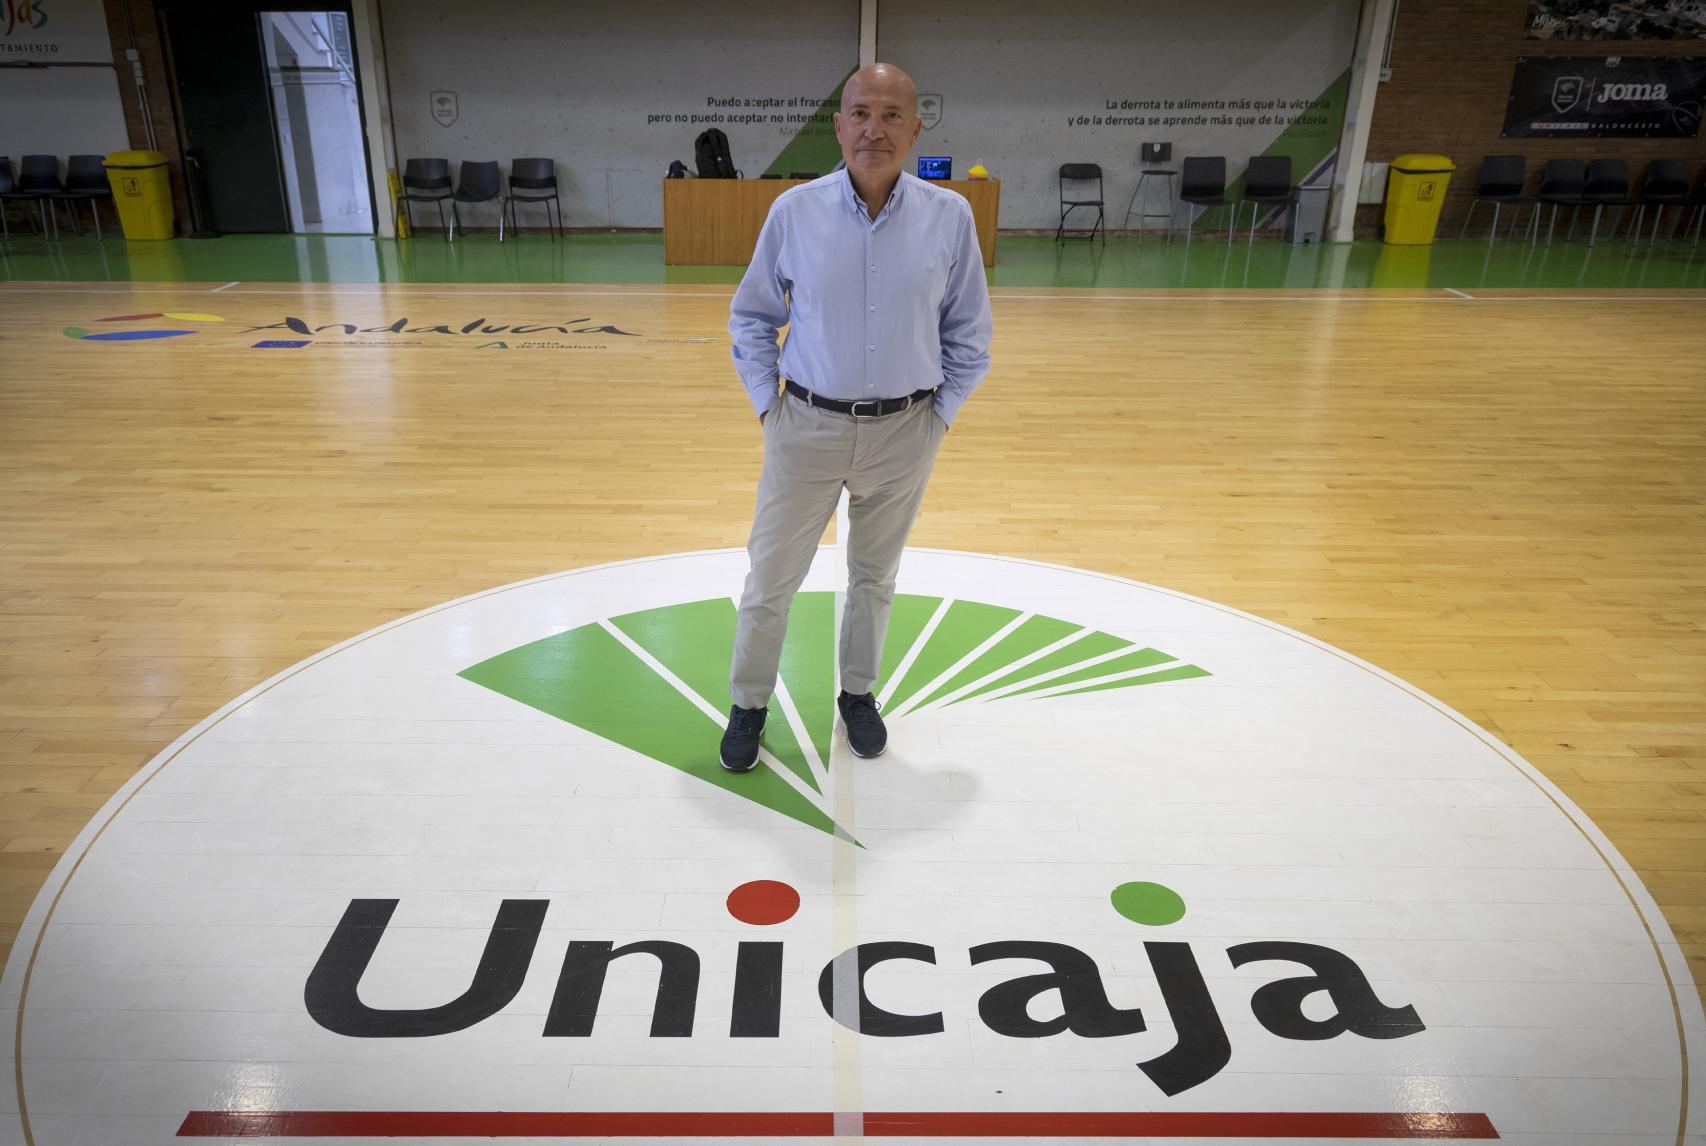 López Nieto posa junto al logo de Unicaja en la cancha de baloncesto.